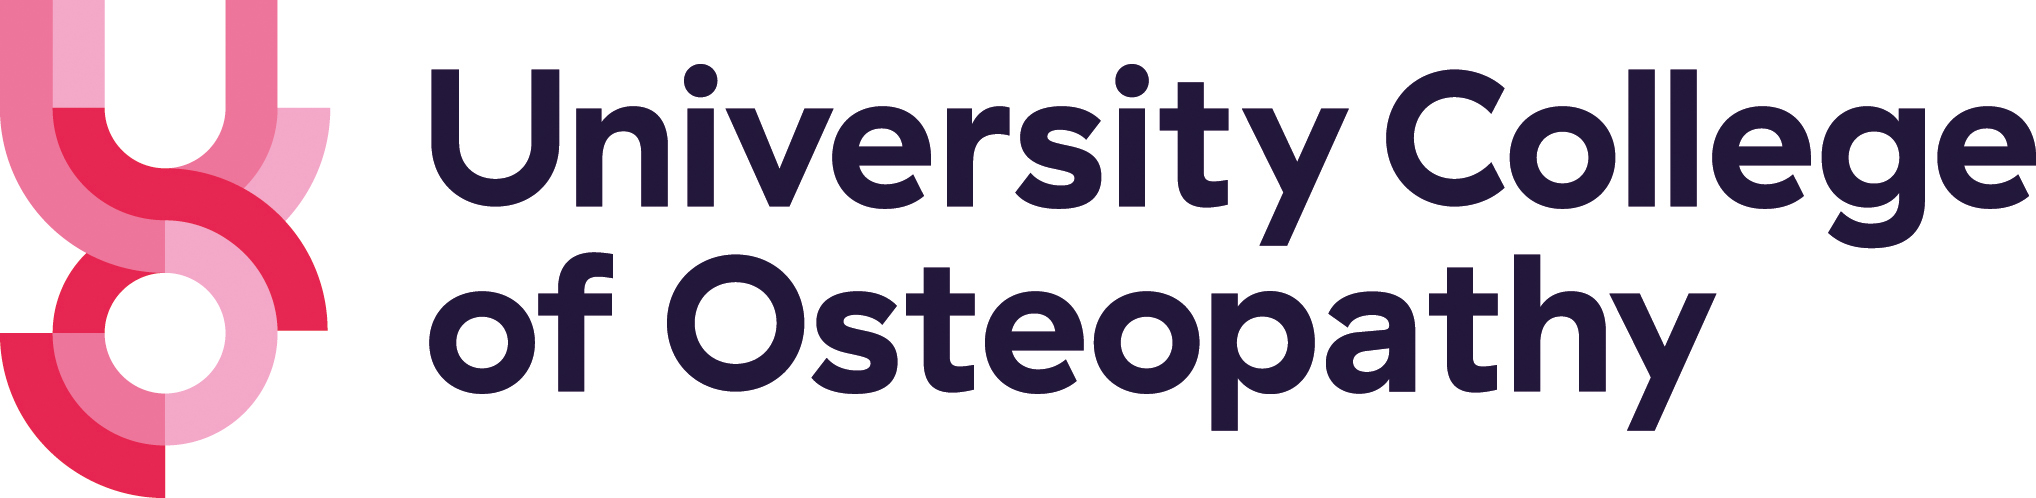 University College of Osteopathy | United Kingdom